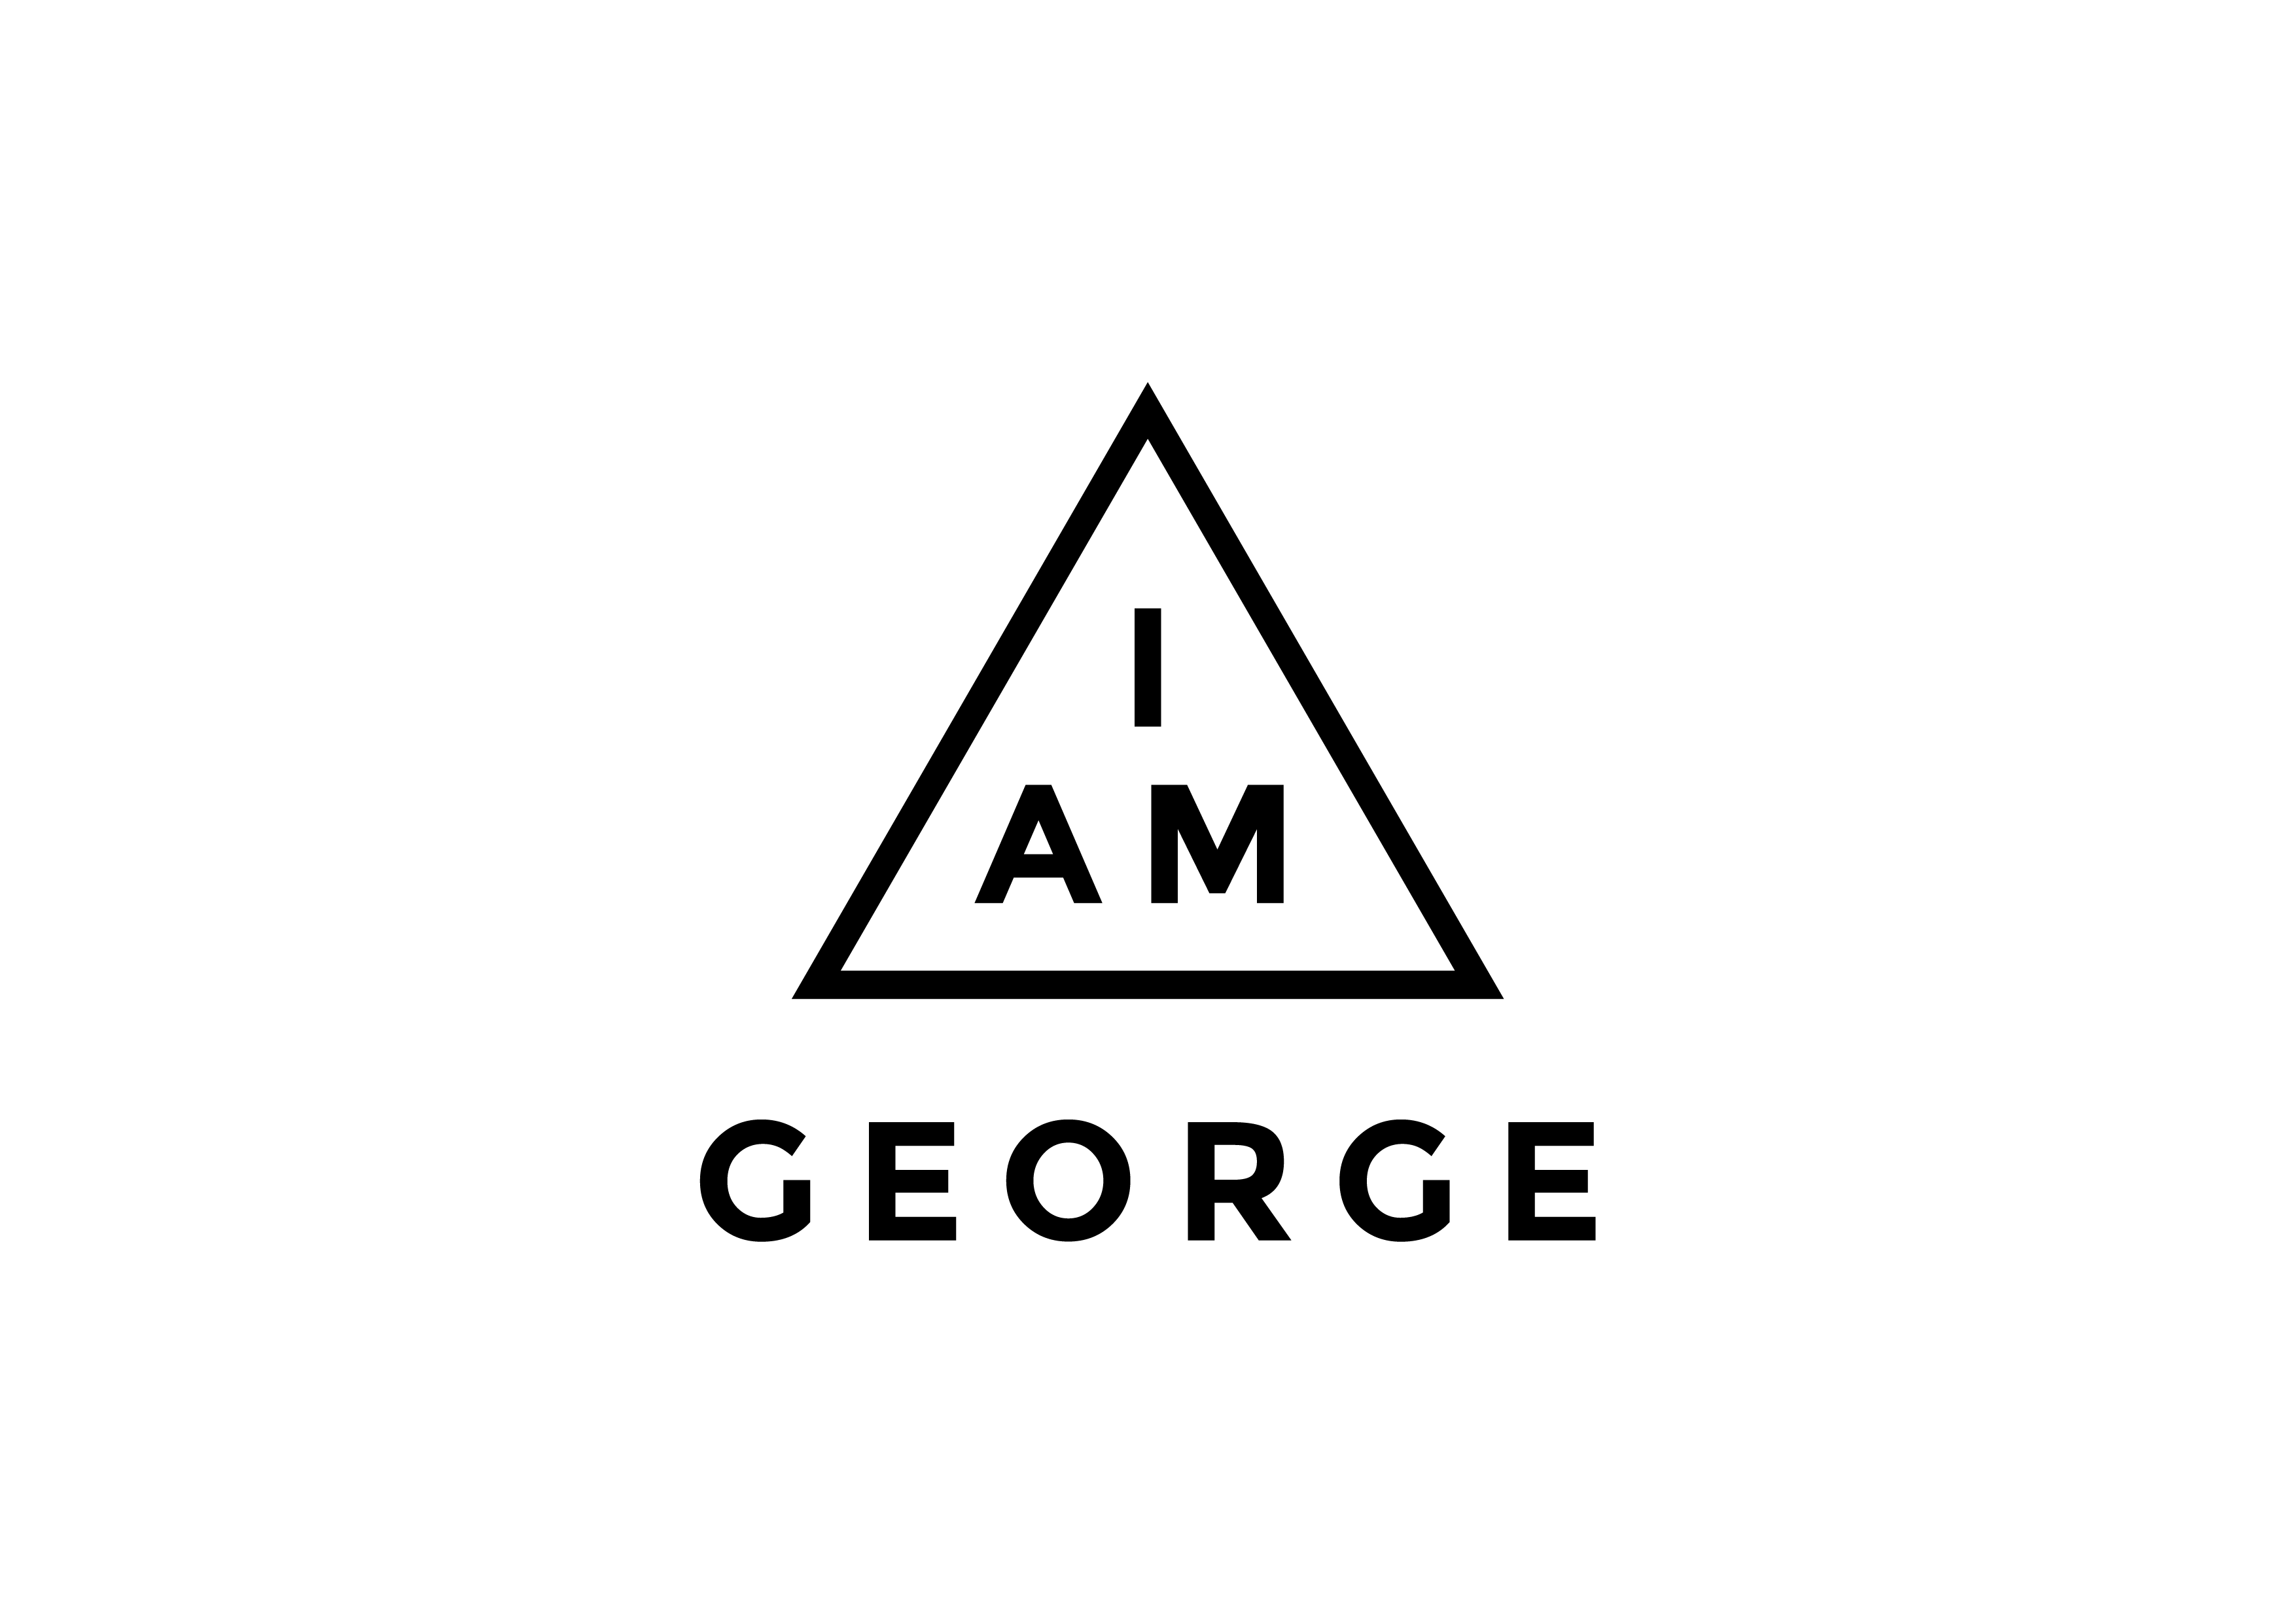 George Logo - I AM GEORGE | Pernod Ricard